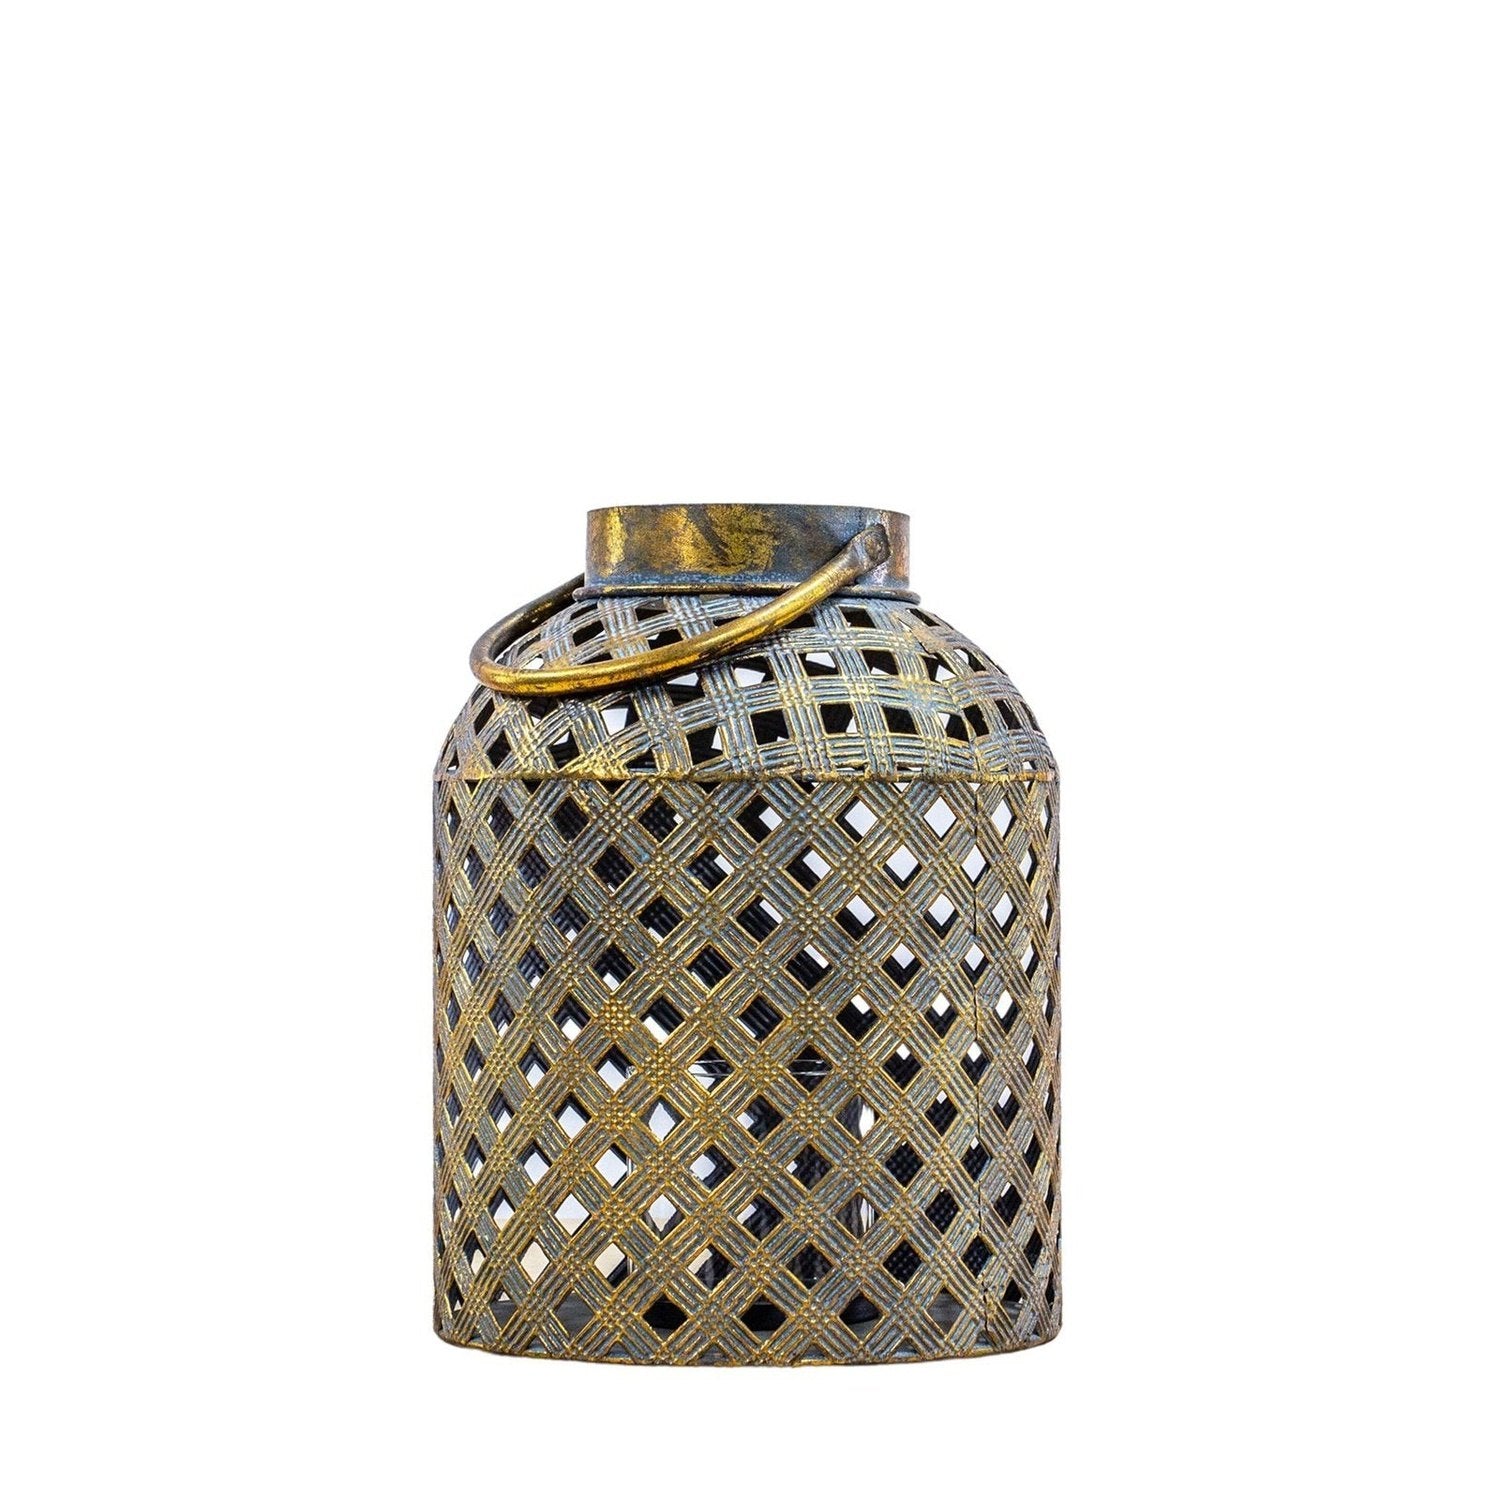 Asaka Bronze Metal Lantern - Weave Effect Pattern - Cut-Out Design